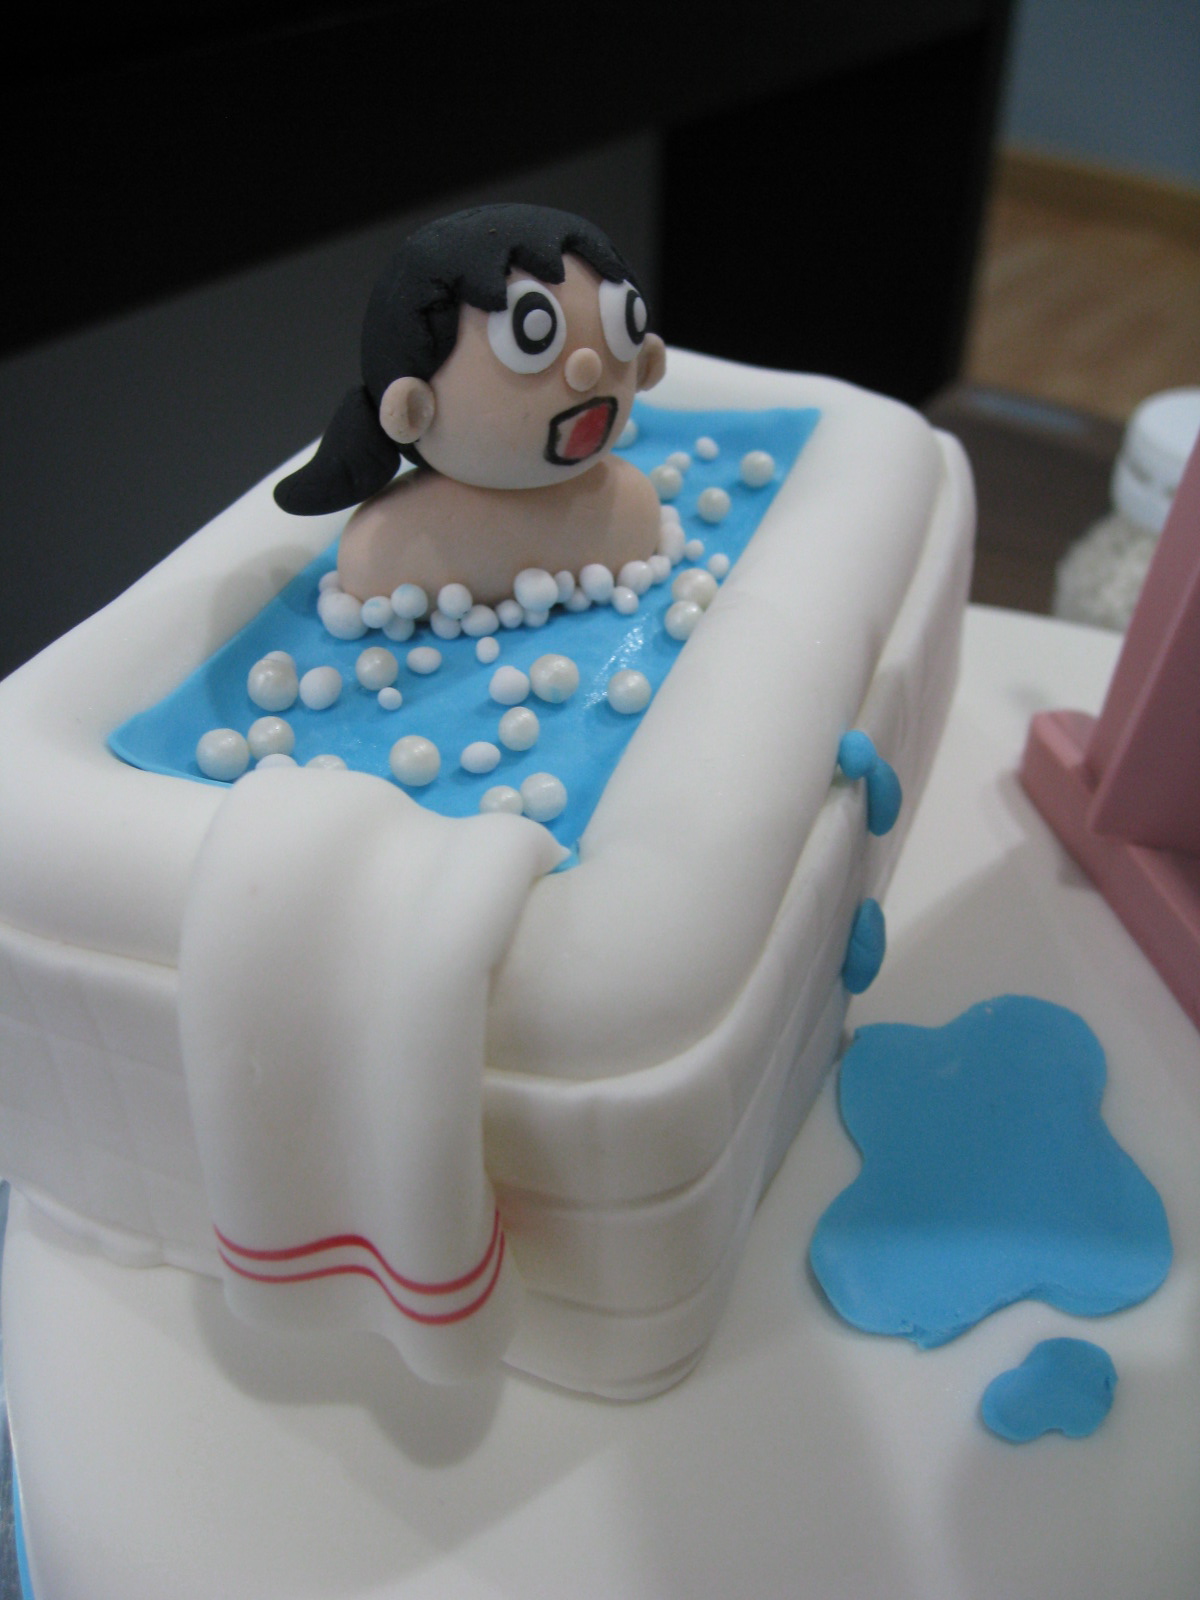 Some Adorable Doraemon Themed Cakes-Doraemon Cake Ideas